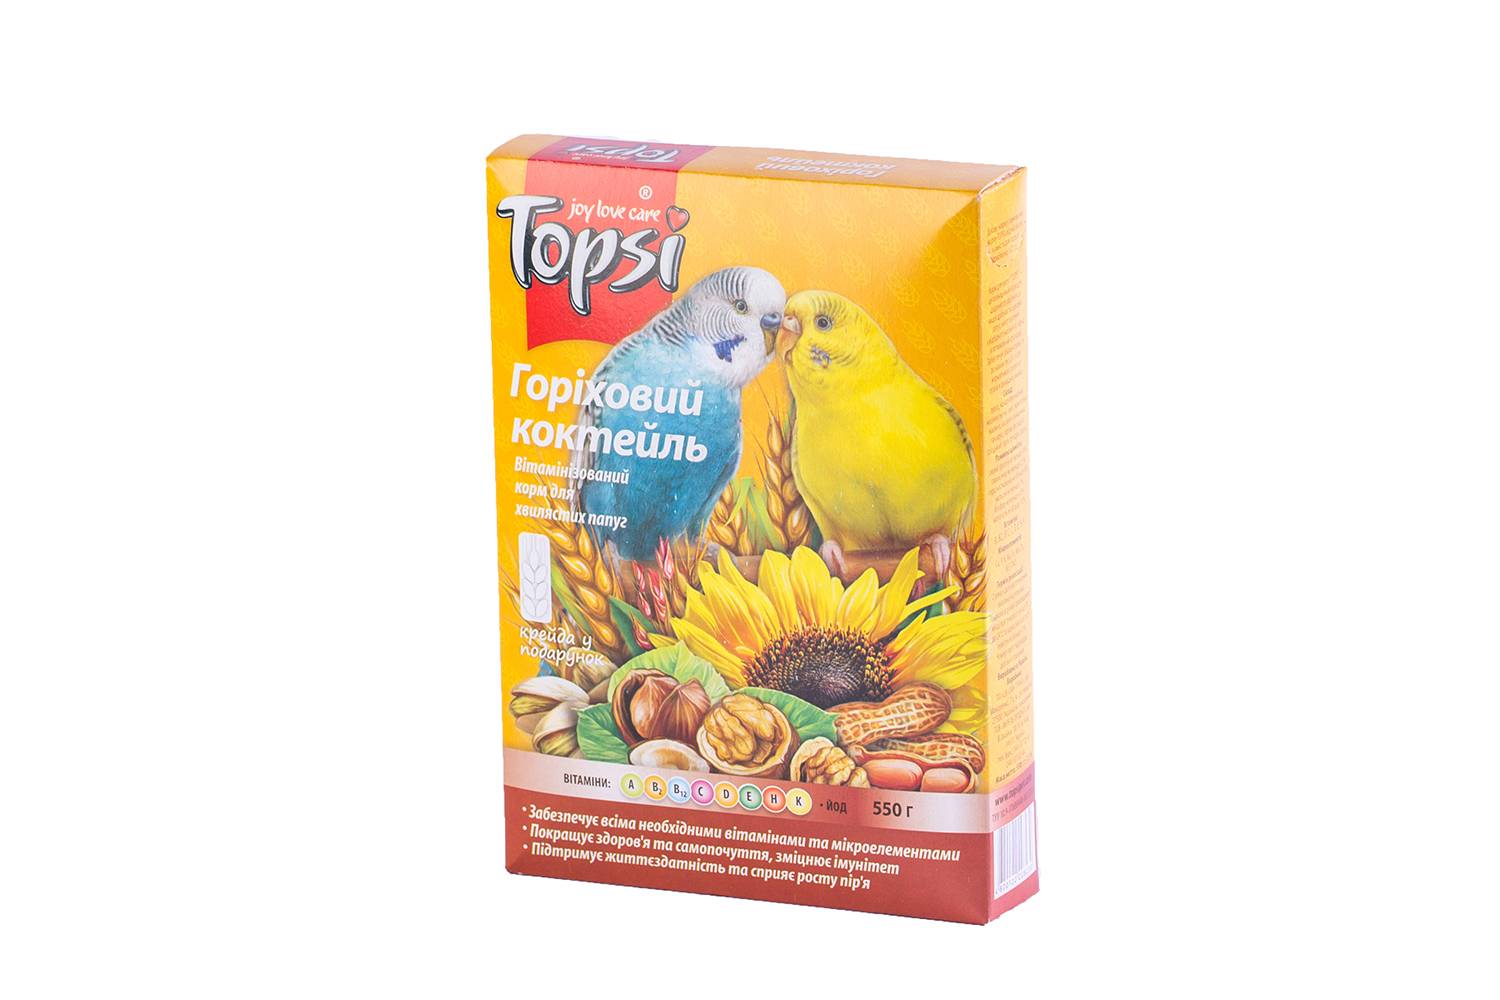 Витамины для попугаев в домашних условиях